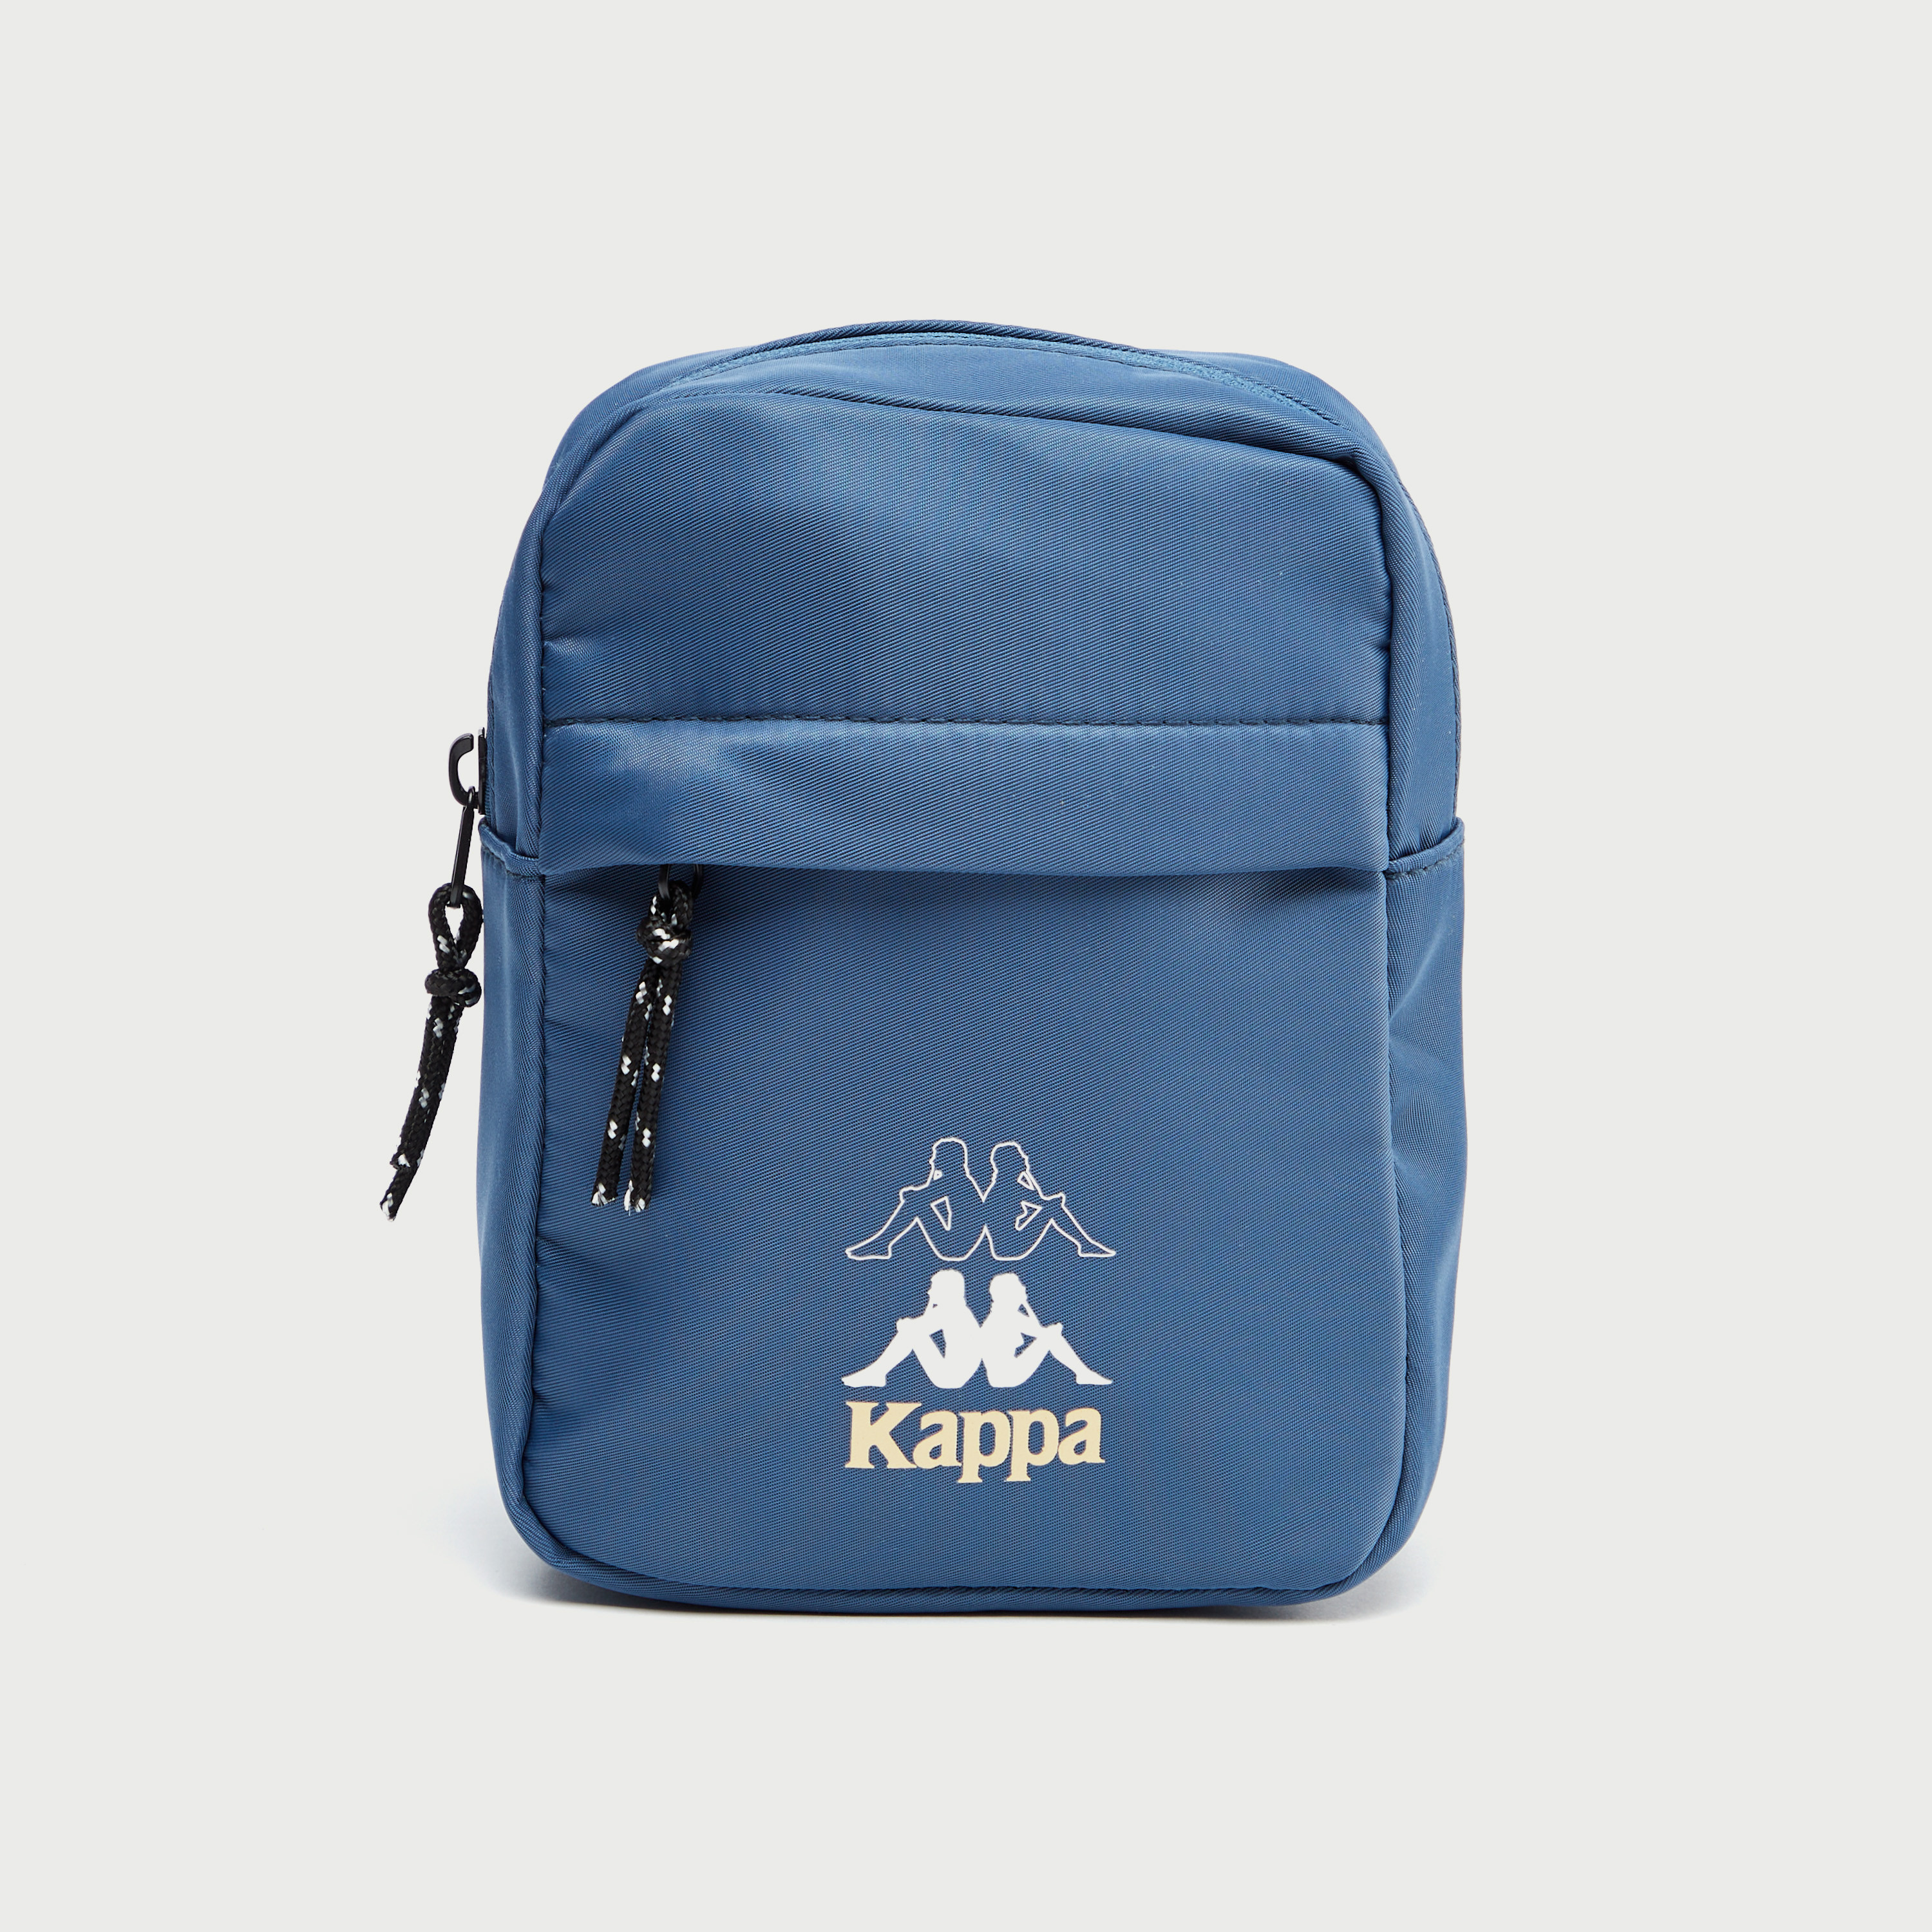 Kappa United States Drawstring Unisex Gym Bag Backpack with Zip | eBay